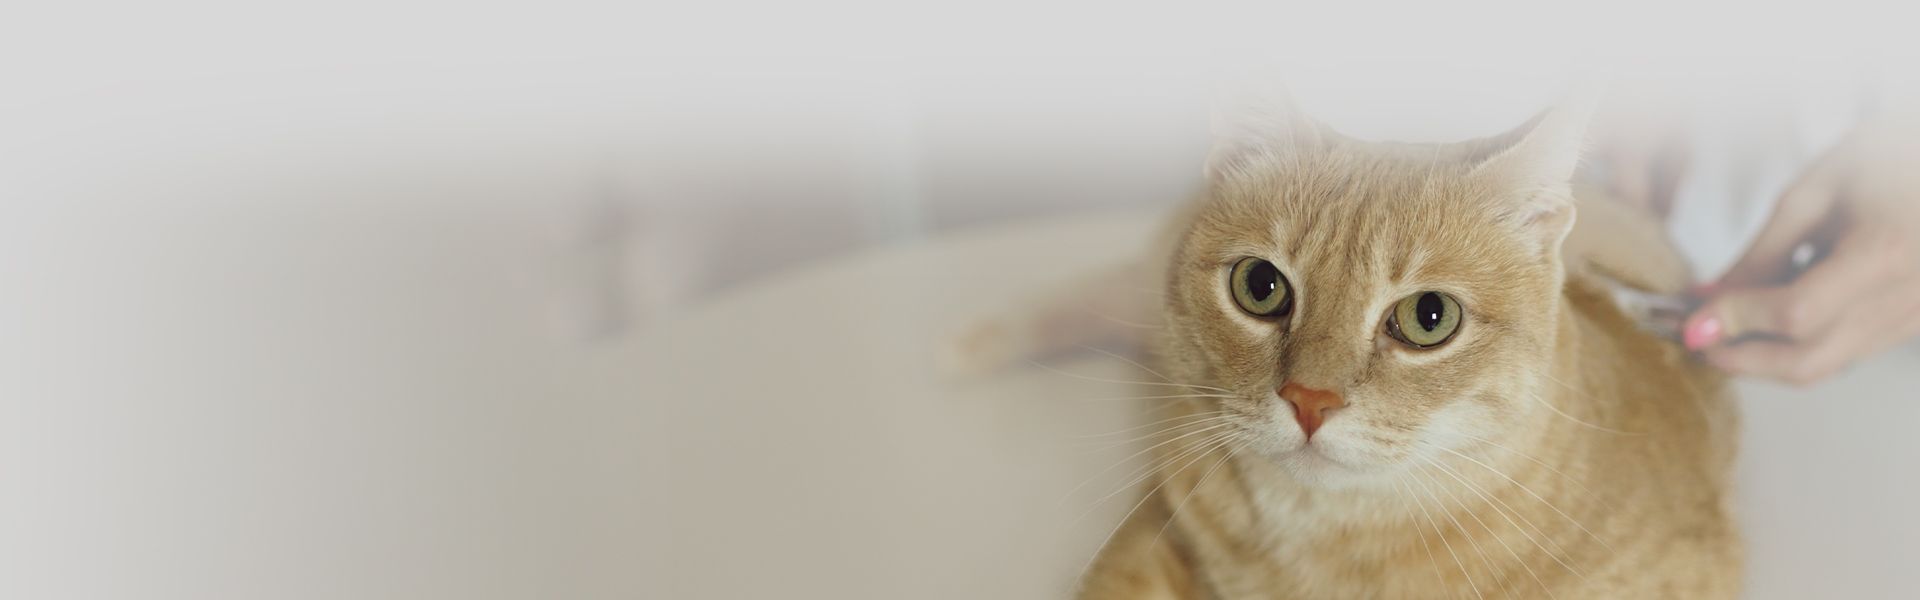 orange cat during a consultation at the vet